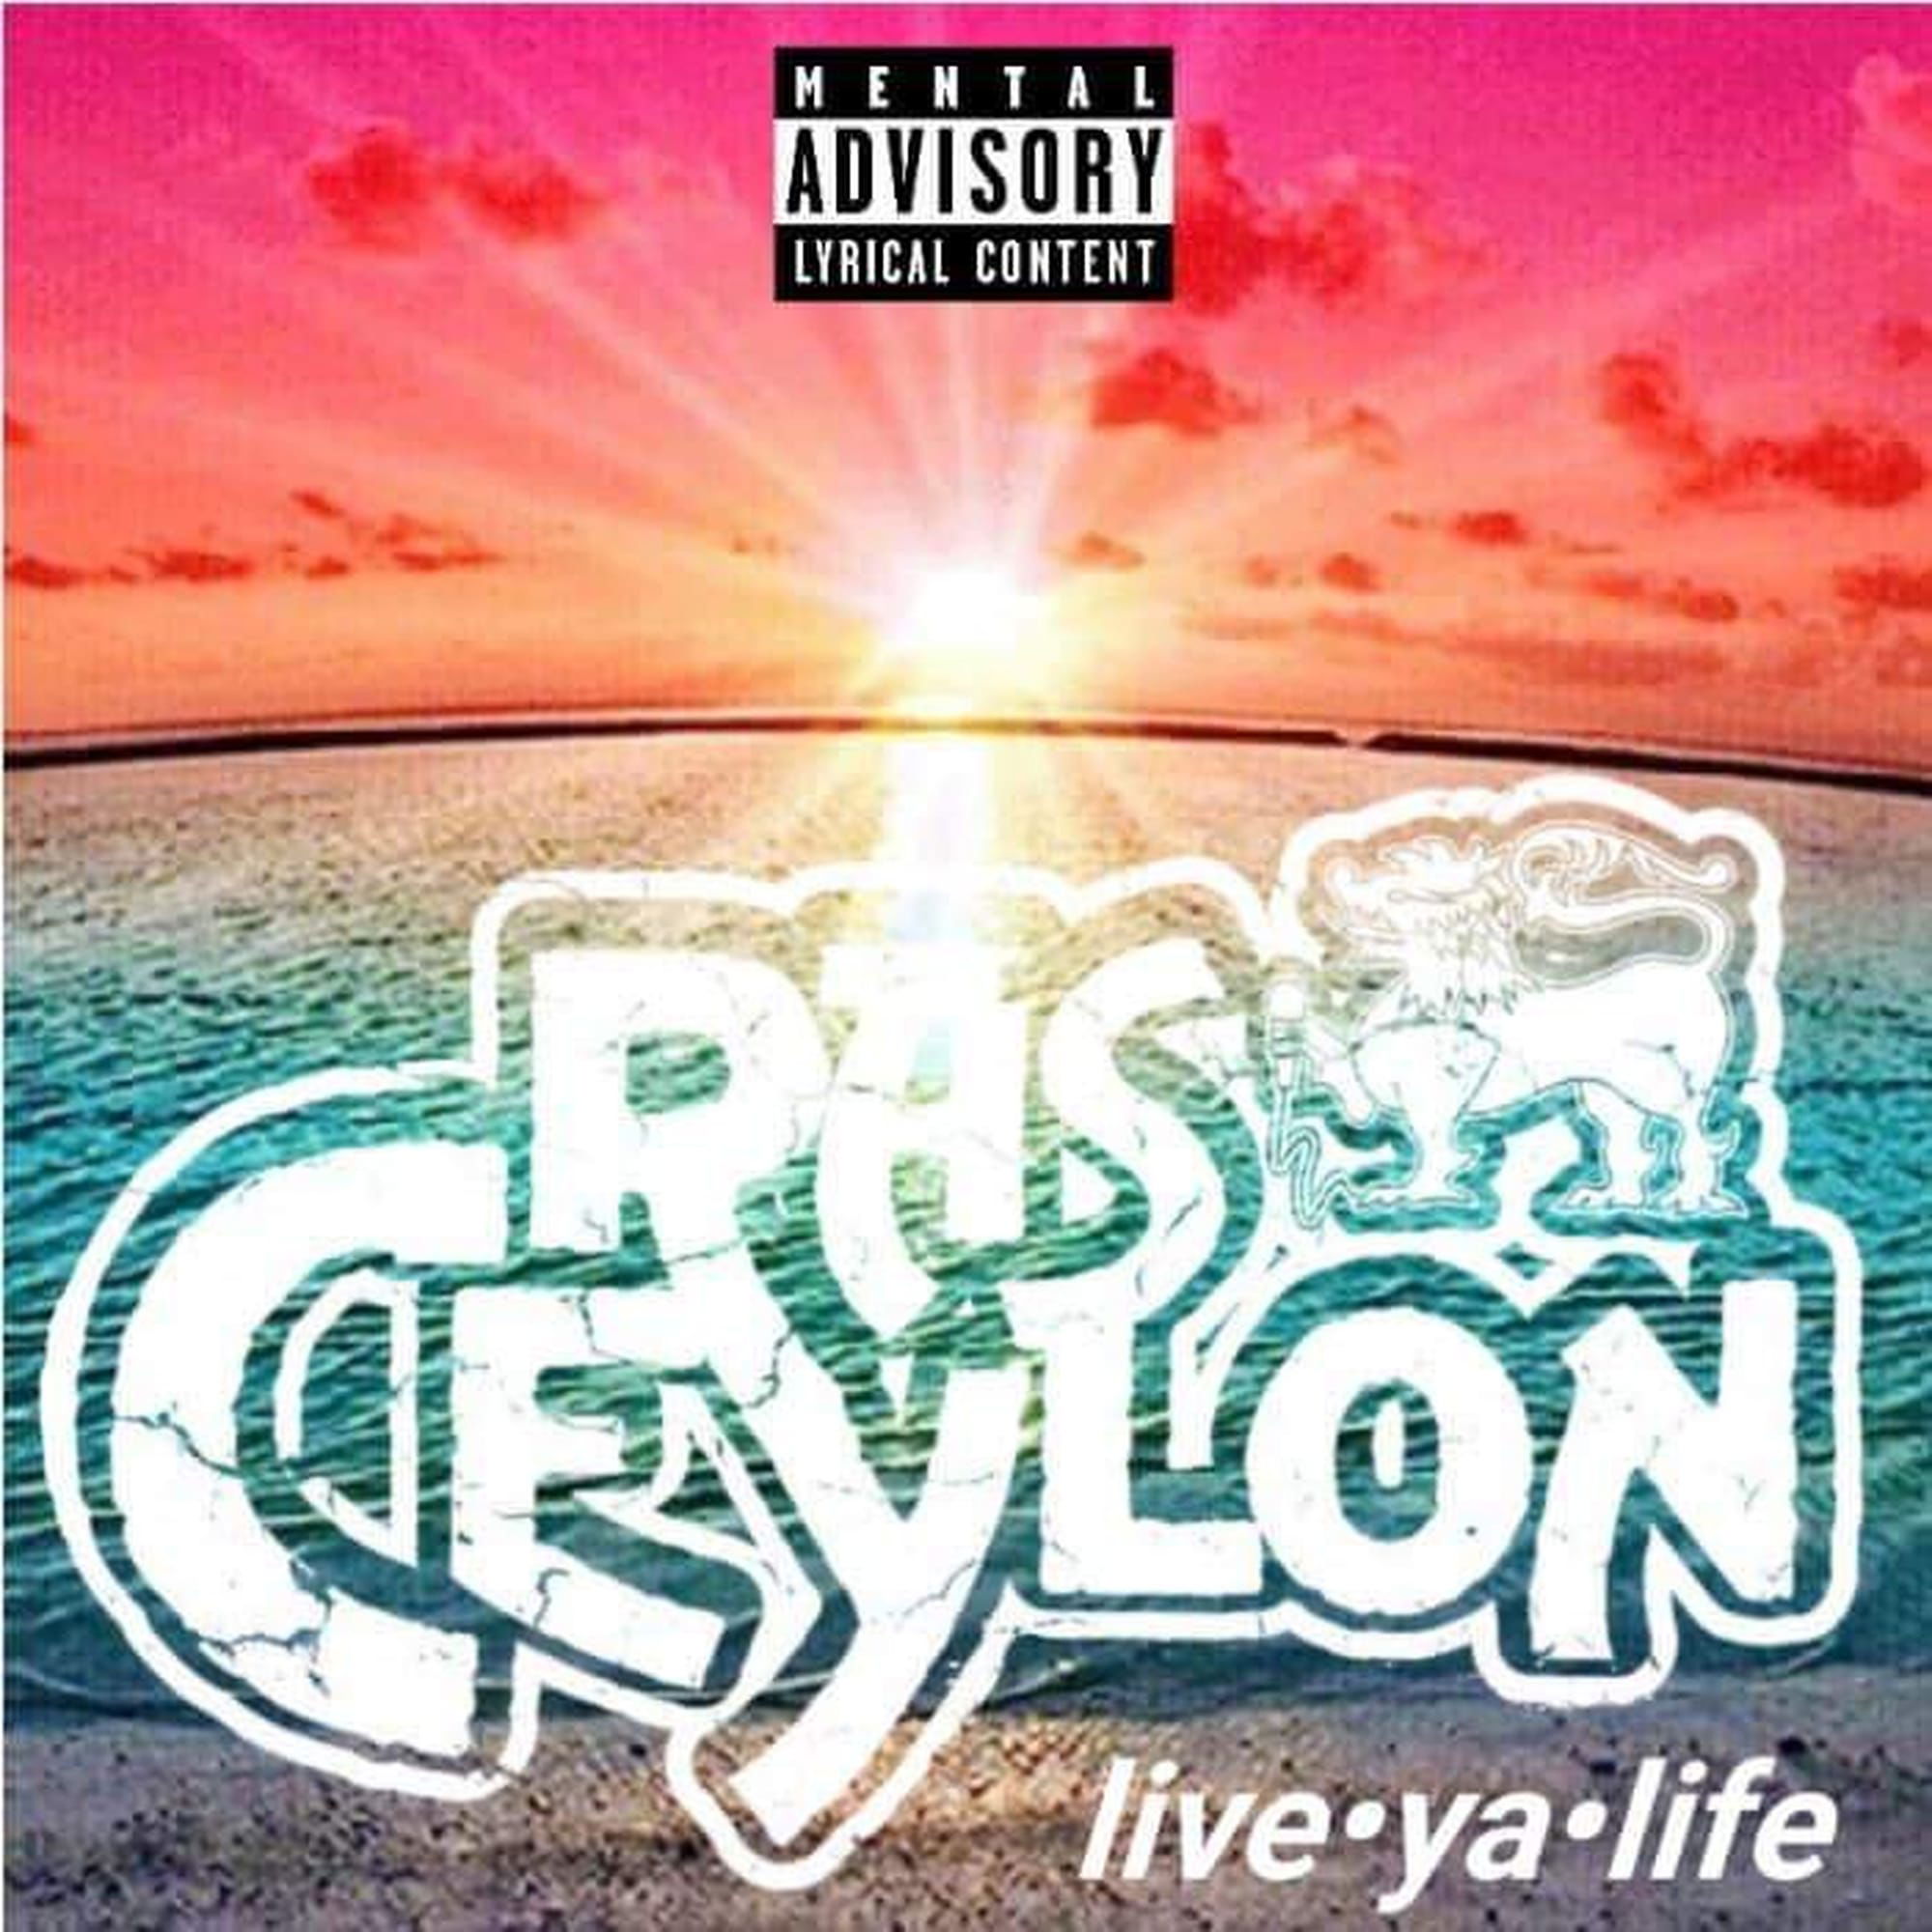 Oakland, California rapper/activist, Ras Ceylon, unveils "Live Ya Life" music video.